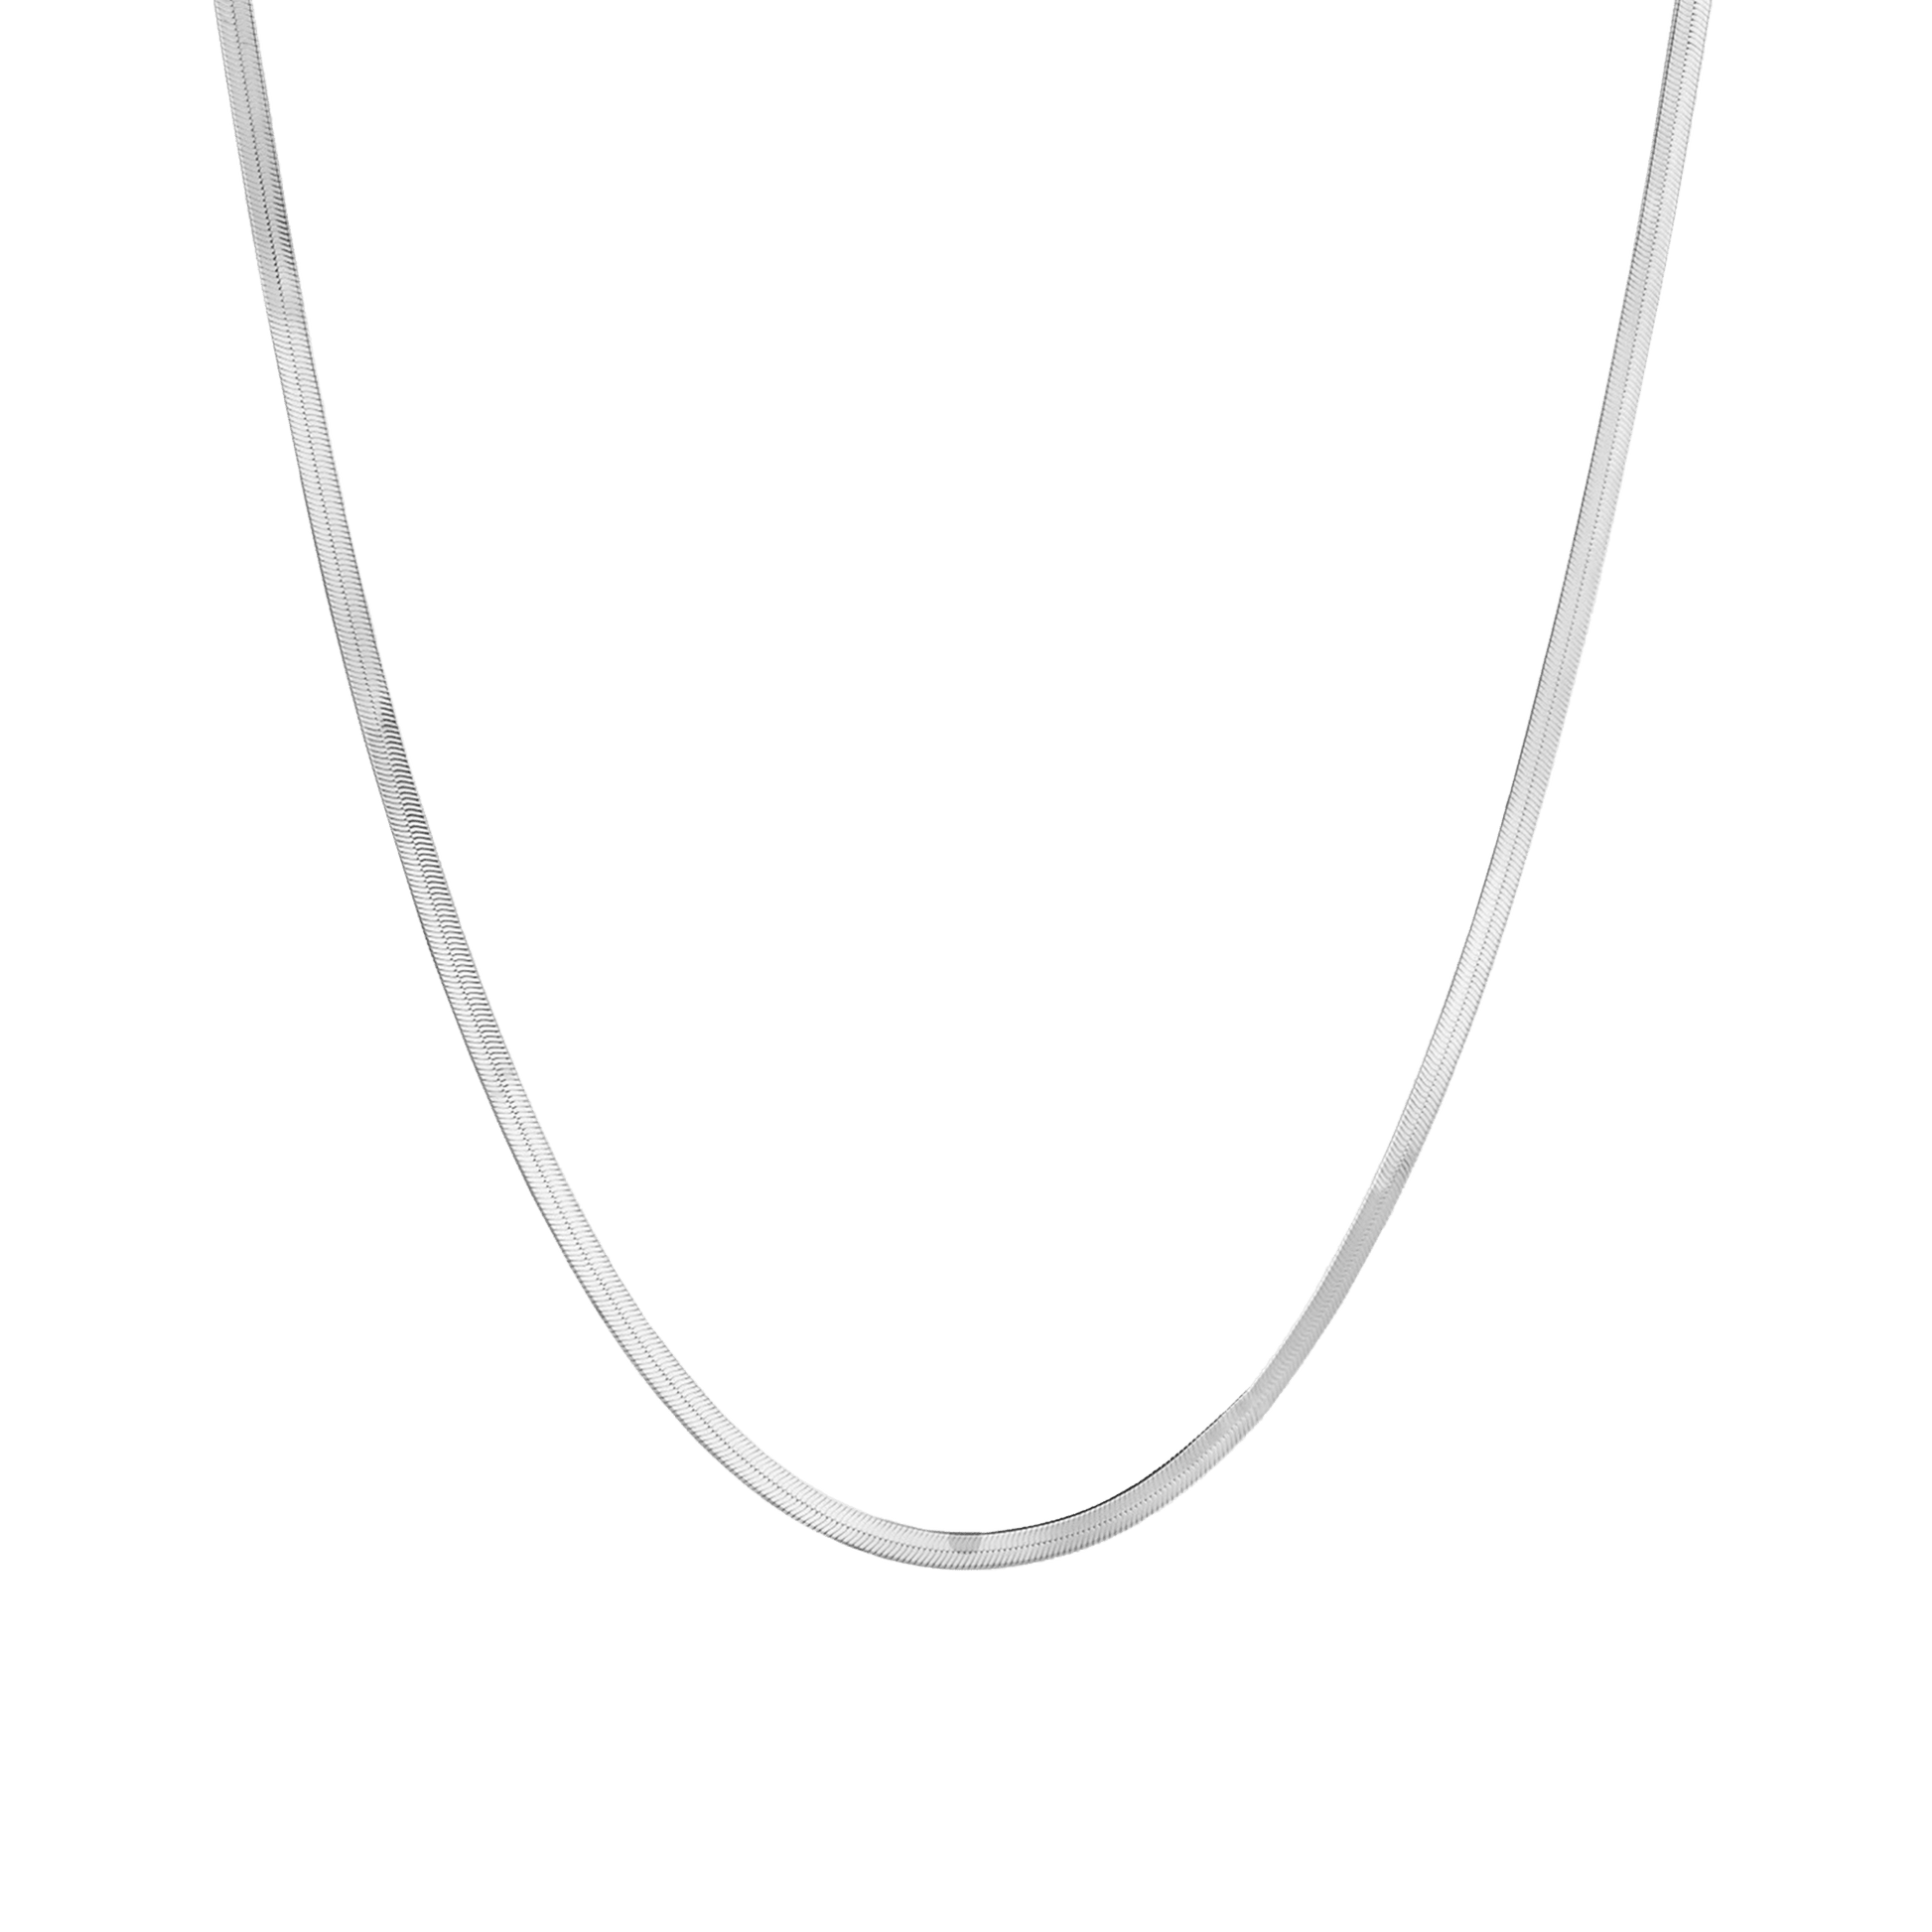 Herringbone Chain Necklace - 18K Rose Vermeil Chains magal-dev 